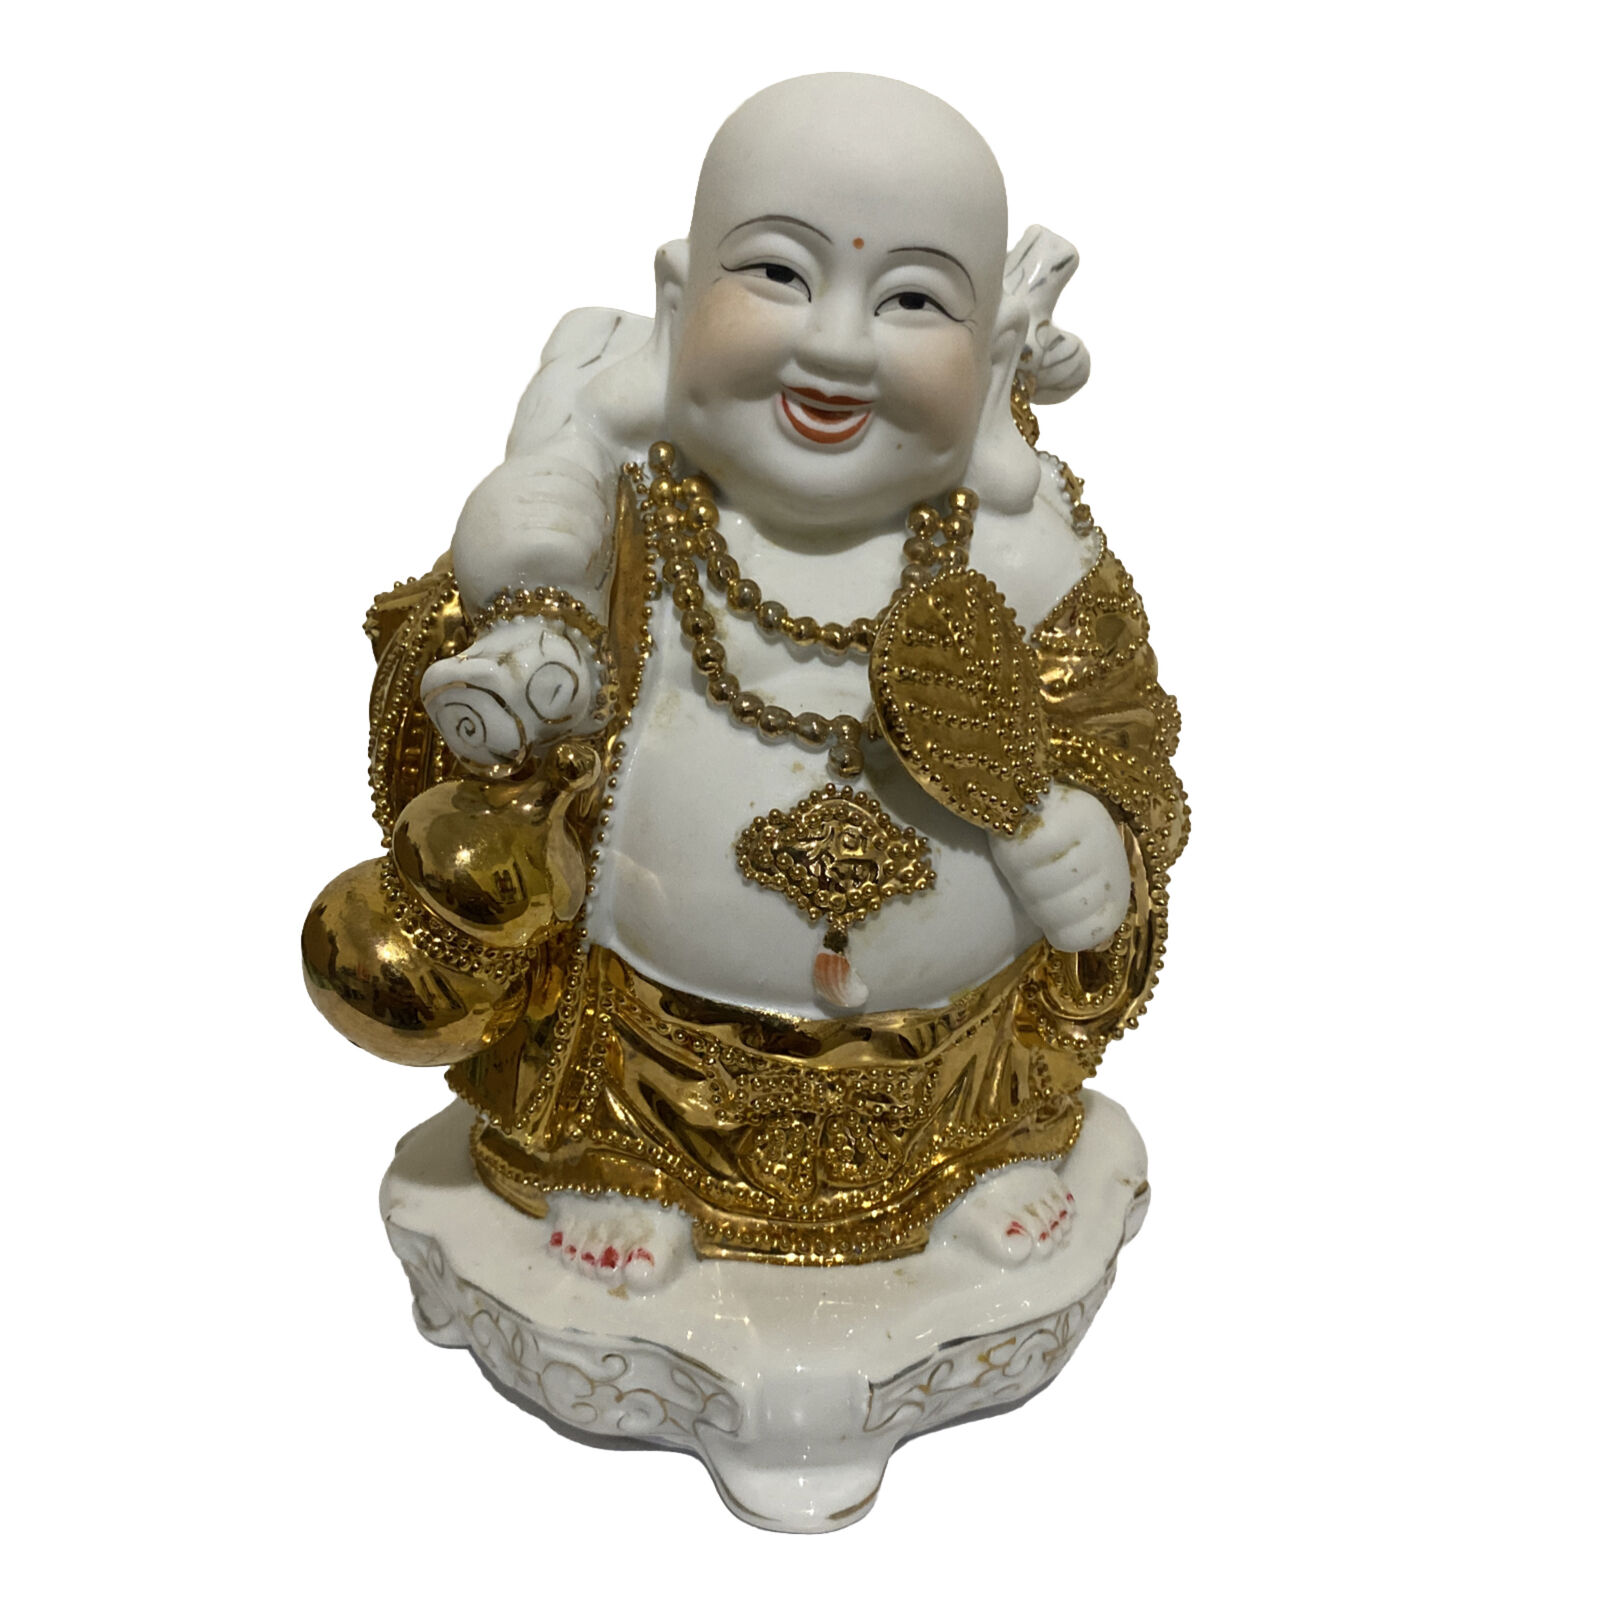 Impressive Ornate Gold Accented Porcelain Religious Buddha 